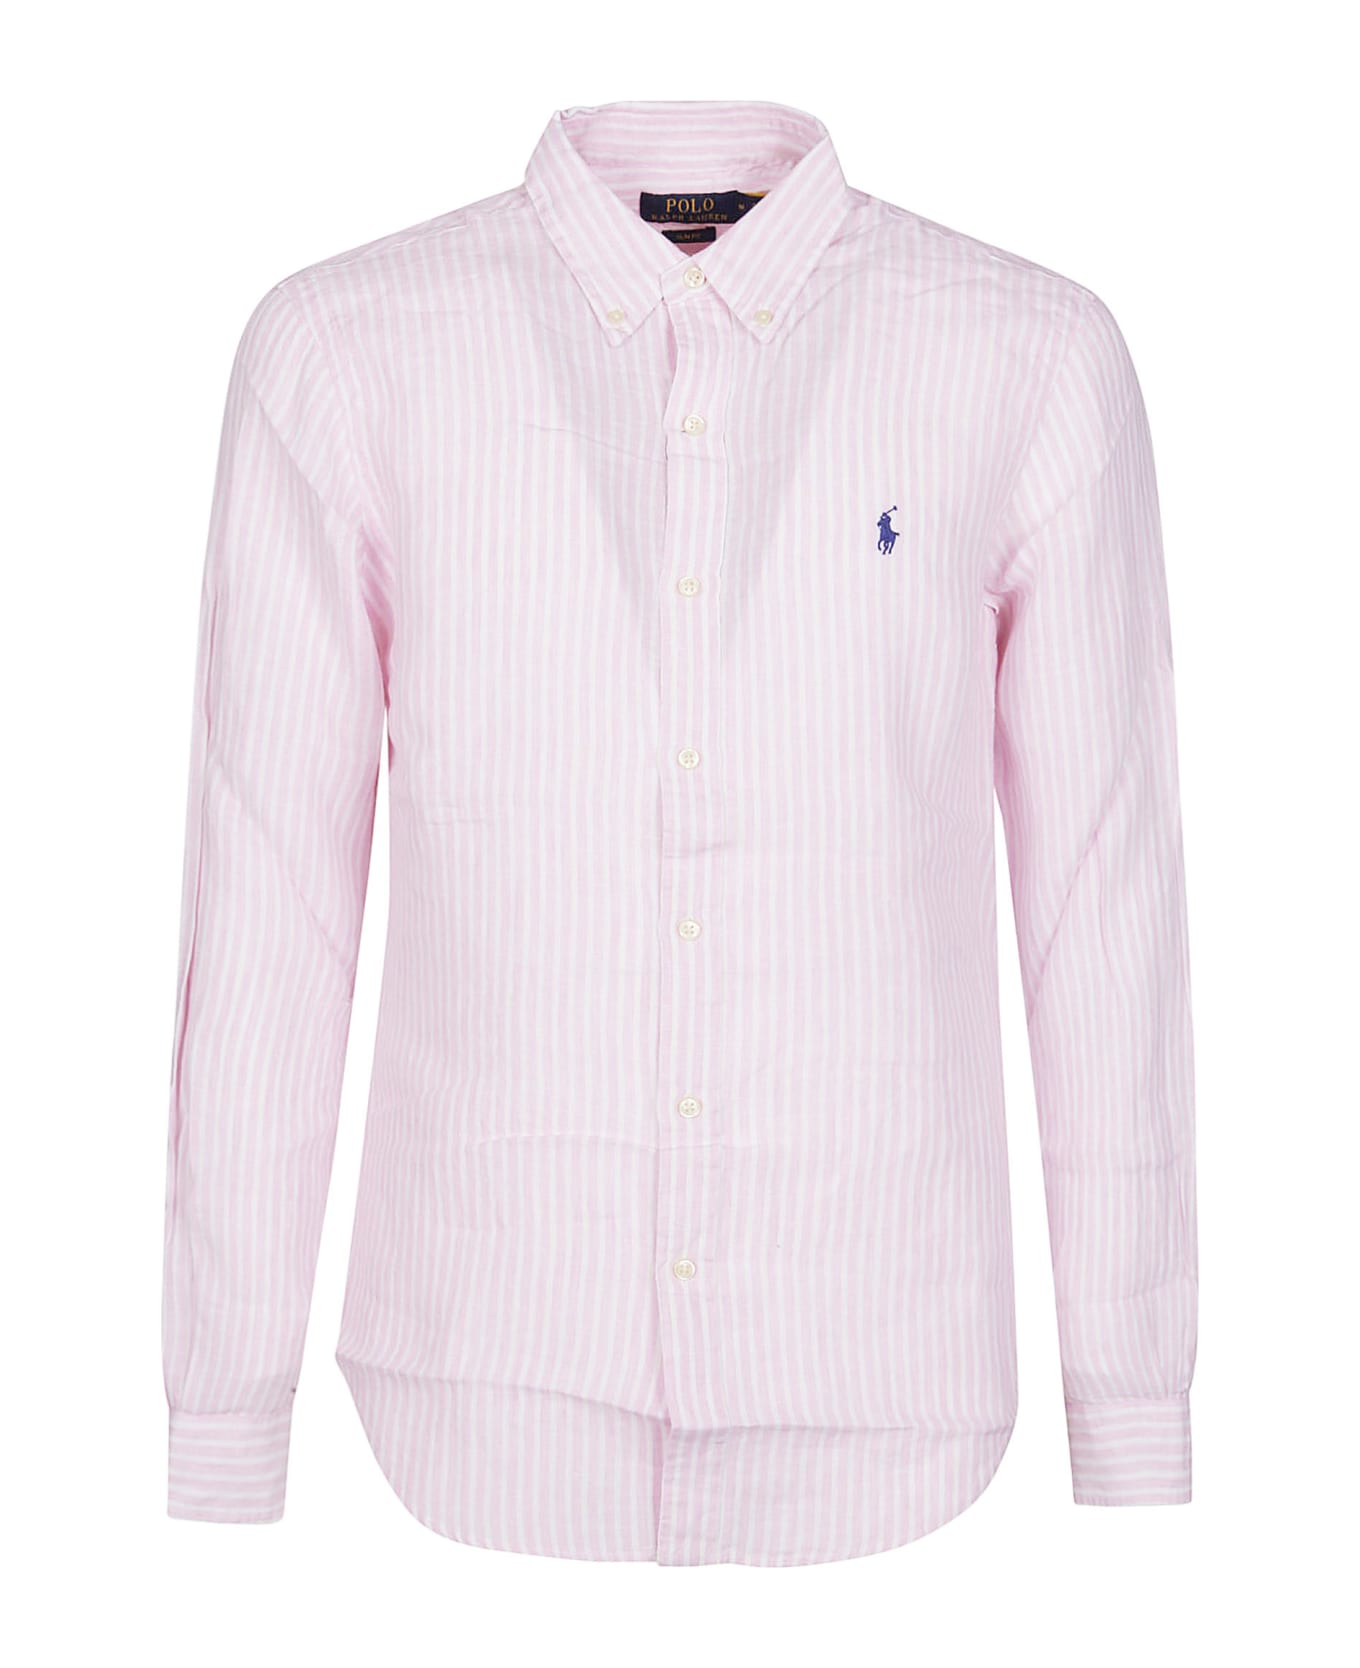 Polo Ralph Lauren Long Sleeve Sport Shirt - Pink/white シャツ